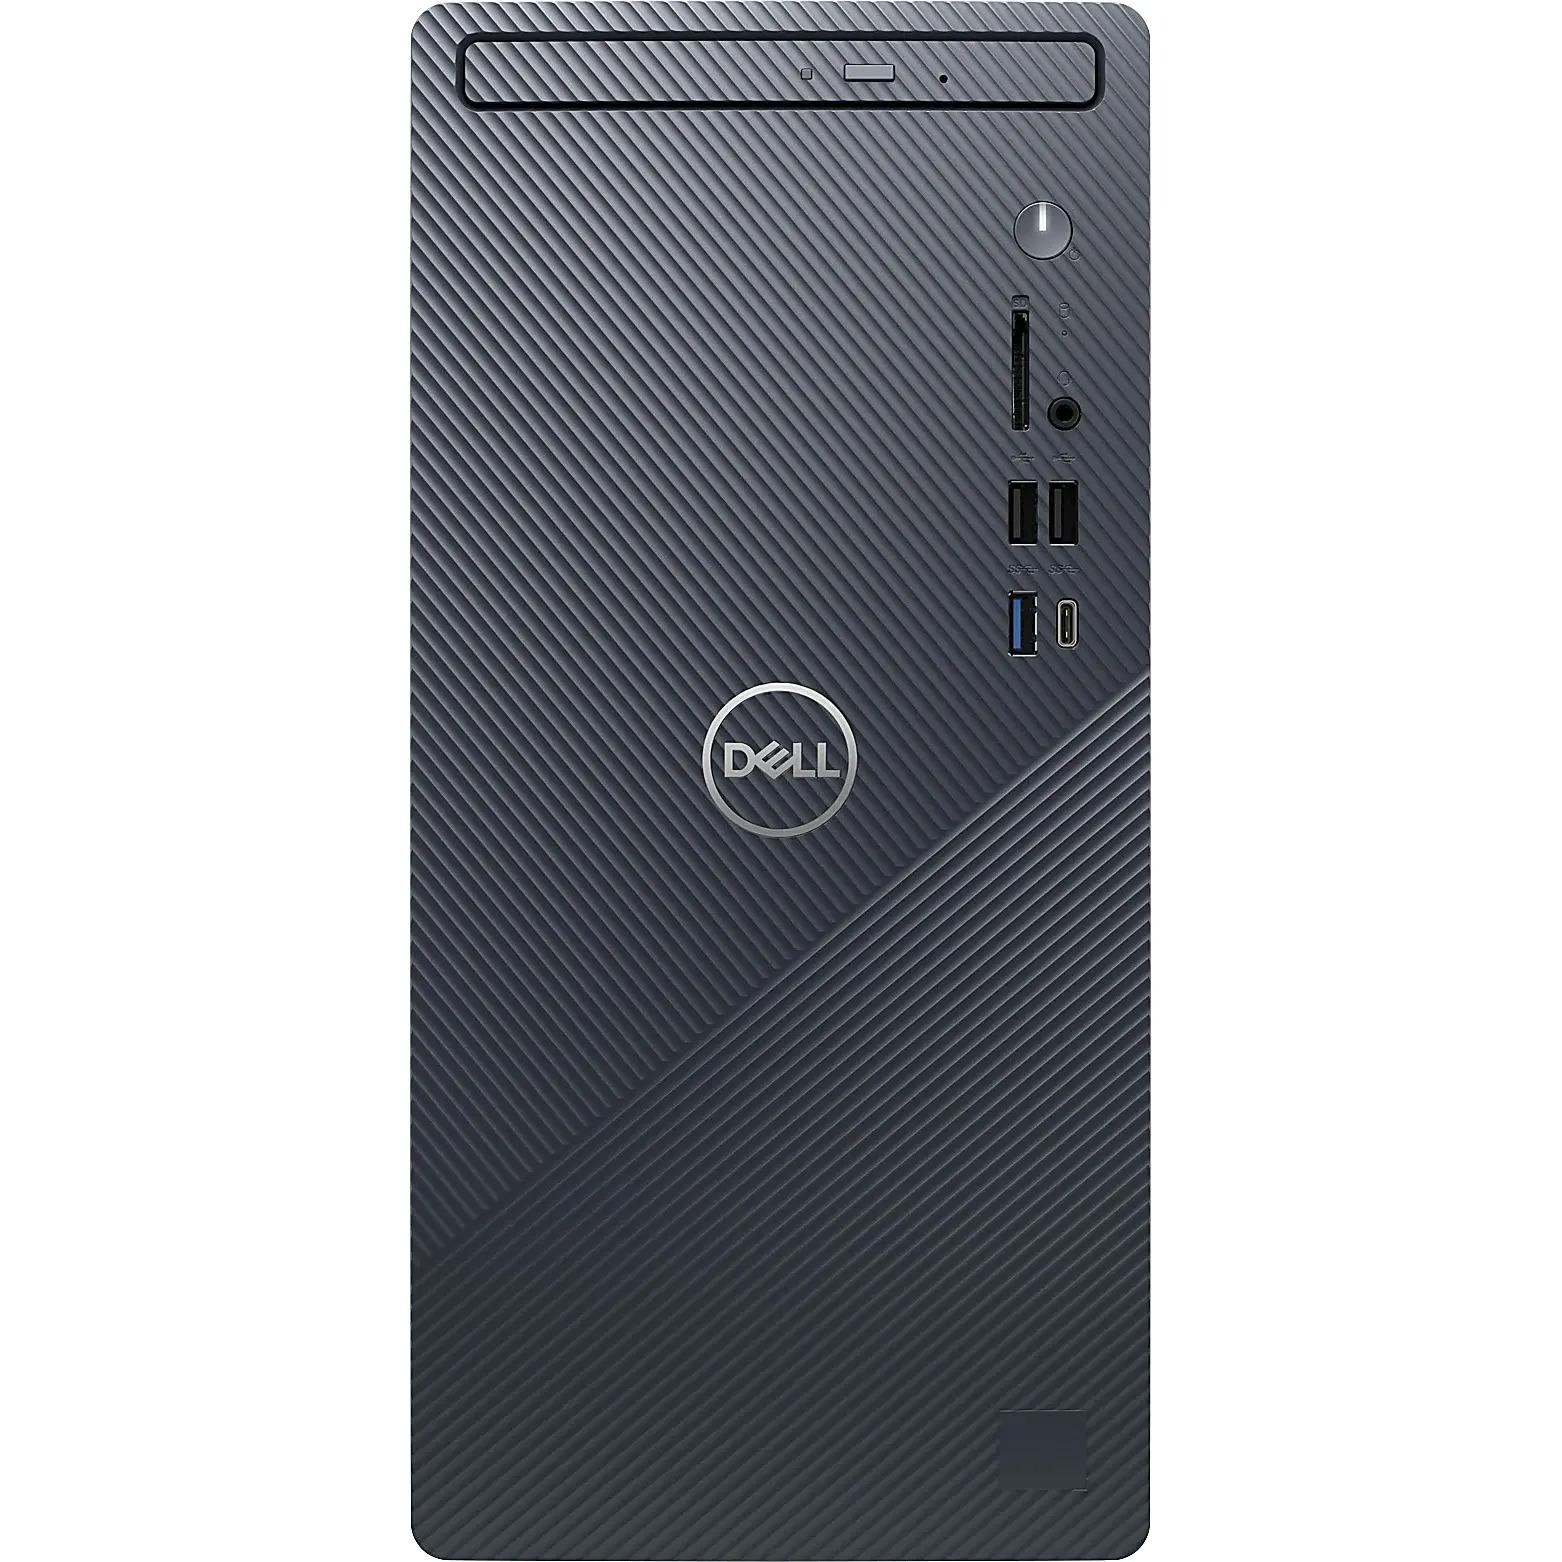 Dell Inspiron 3910 i5 8GB 256GB 1TB Desktop Computer for $399.99 Shipped